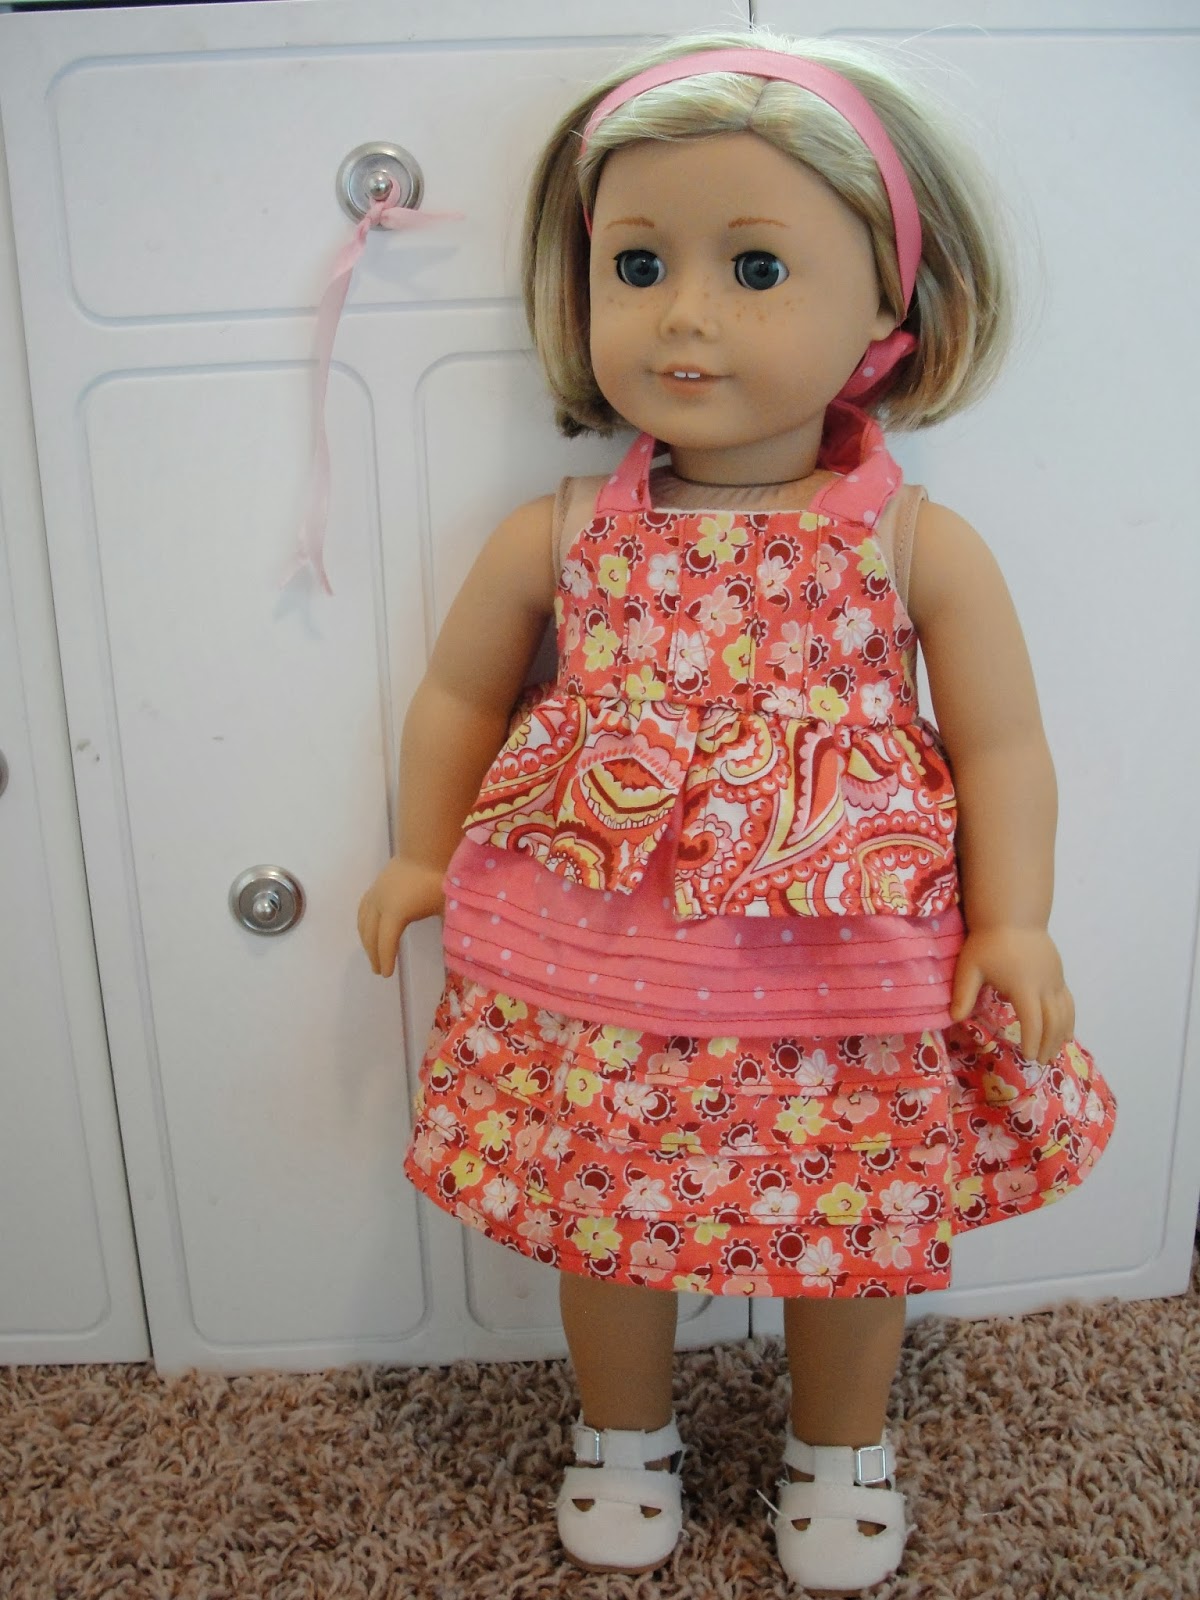  http://thetiptoefairy.com/blog/2014/03/american-girl-doll-blog-hop.html